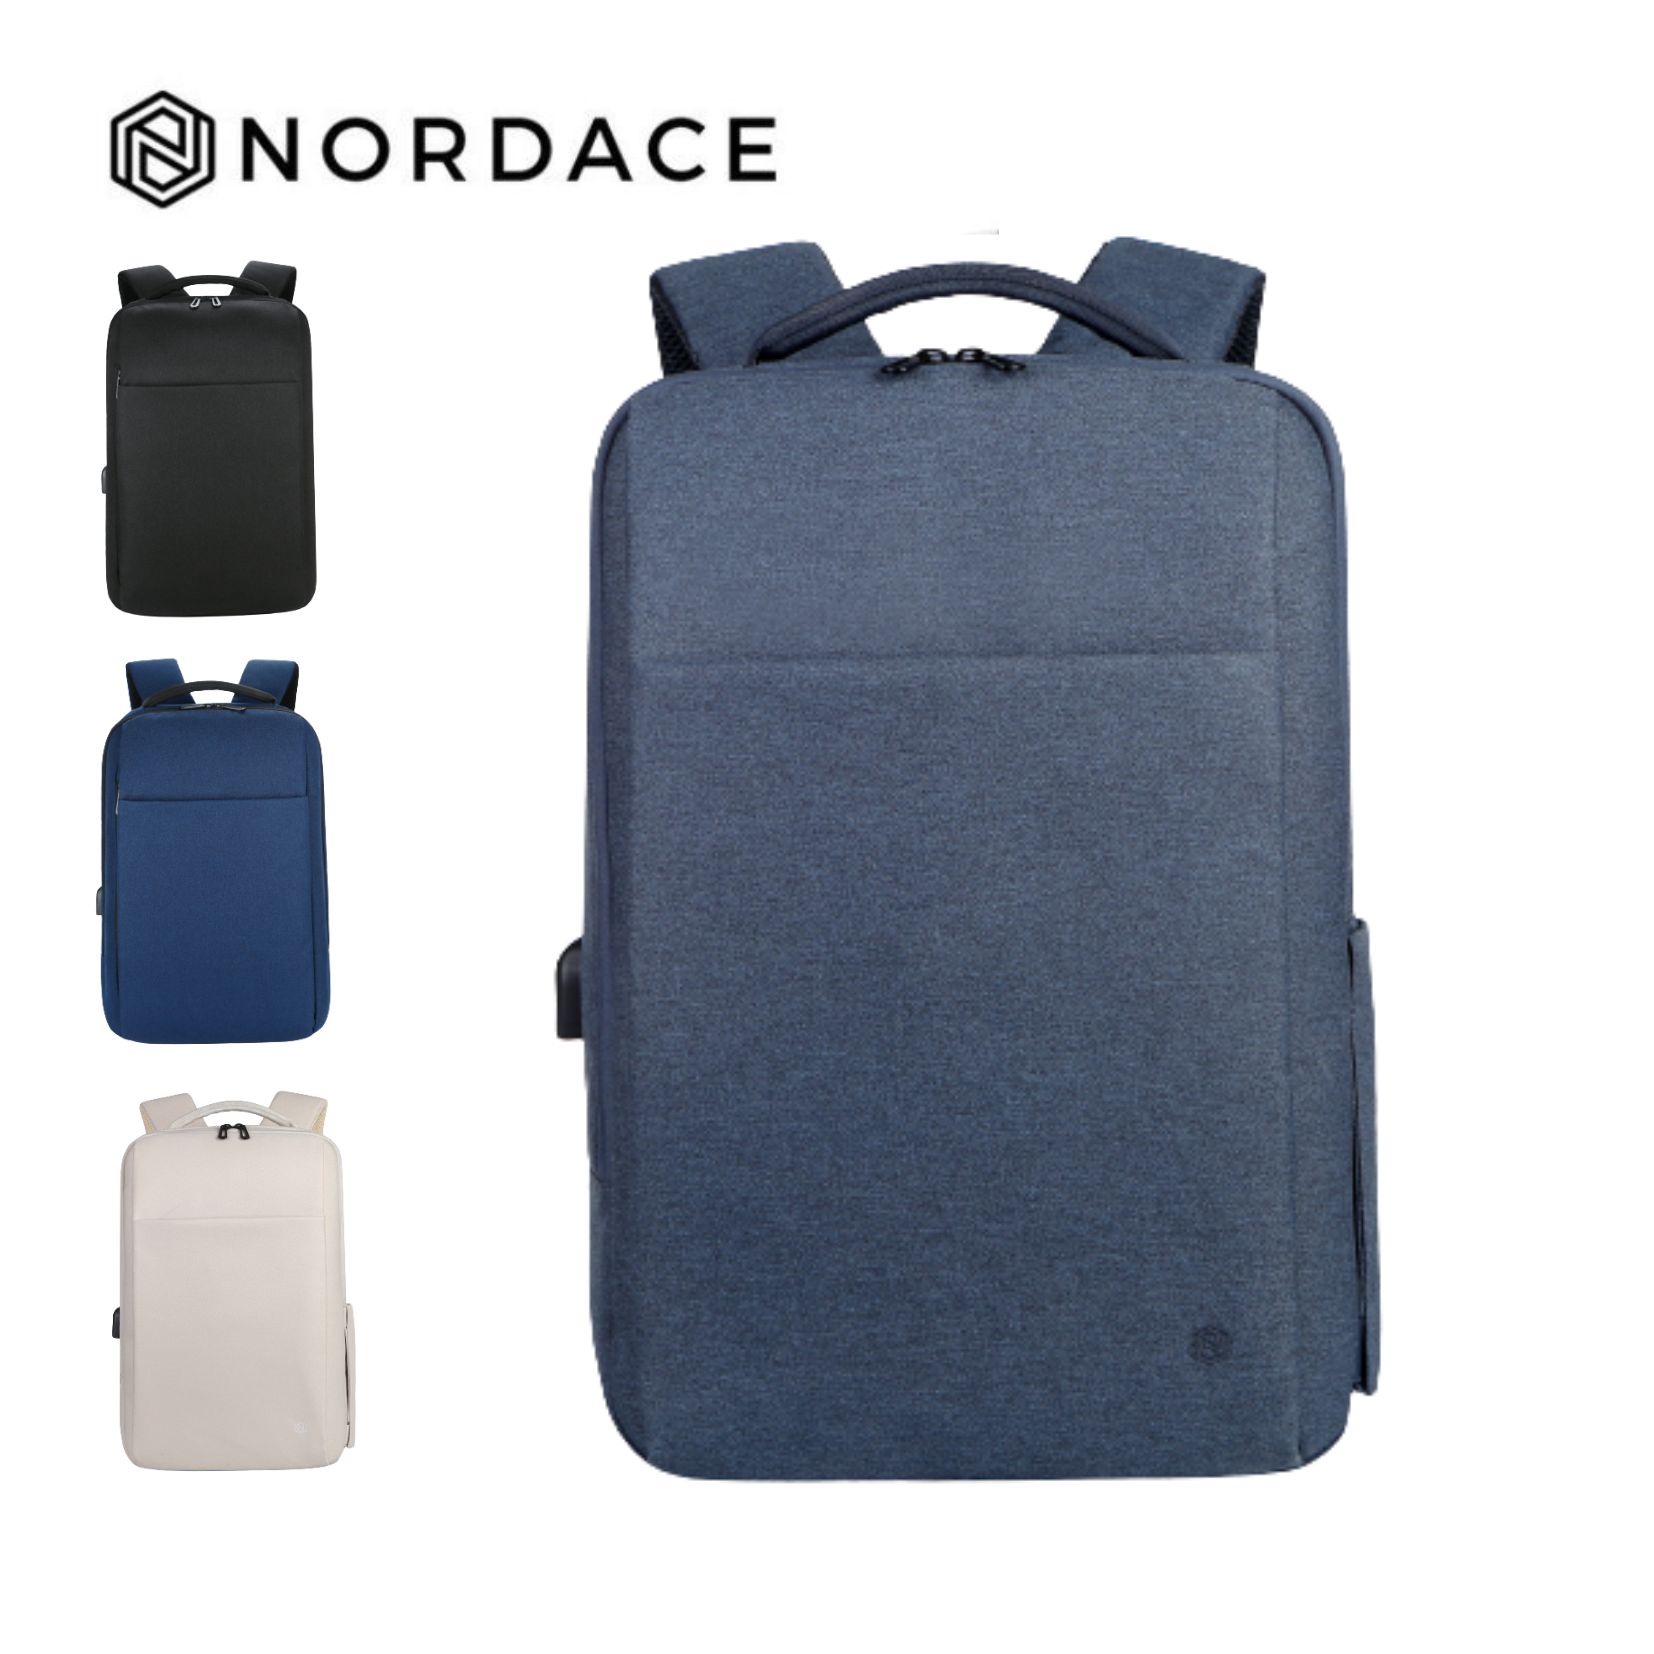 Nordace Bergen - 後背包 斜背包 手提包 胸包 側背包 旅行包 工作包 四色可選-灰藍色